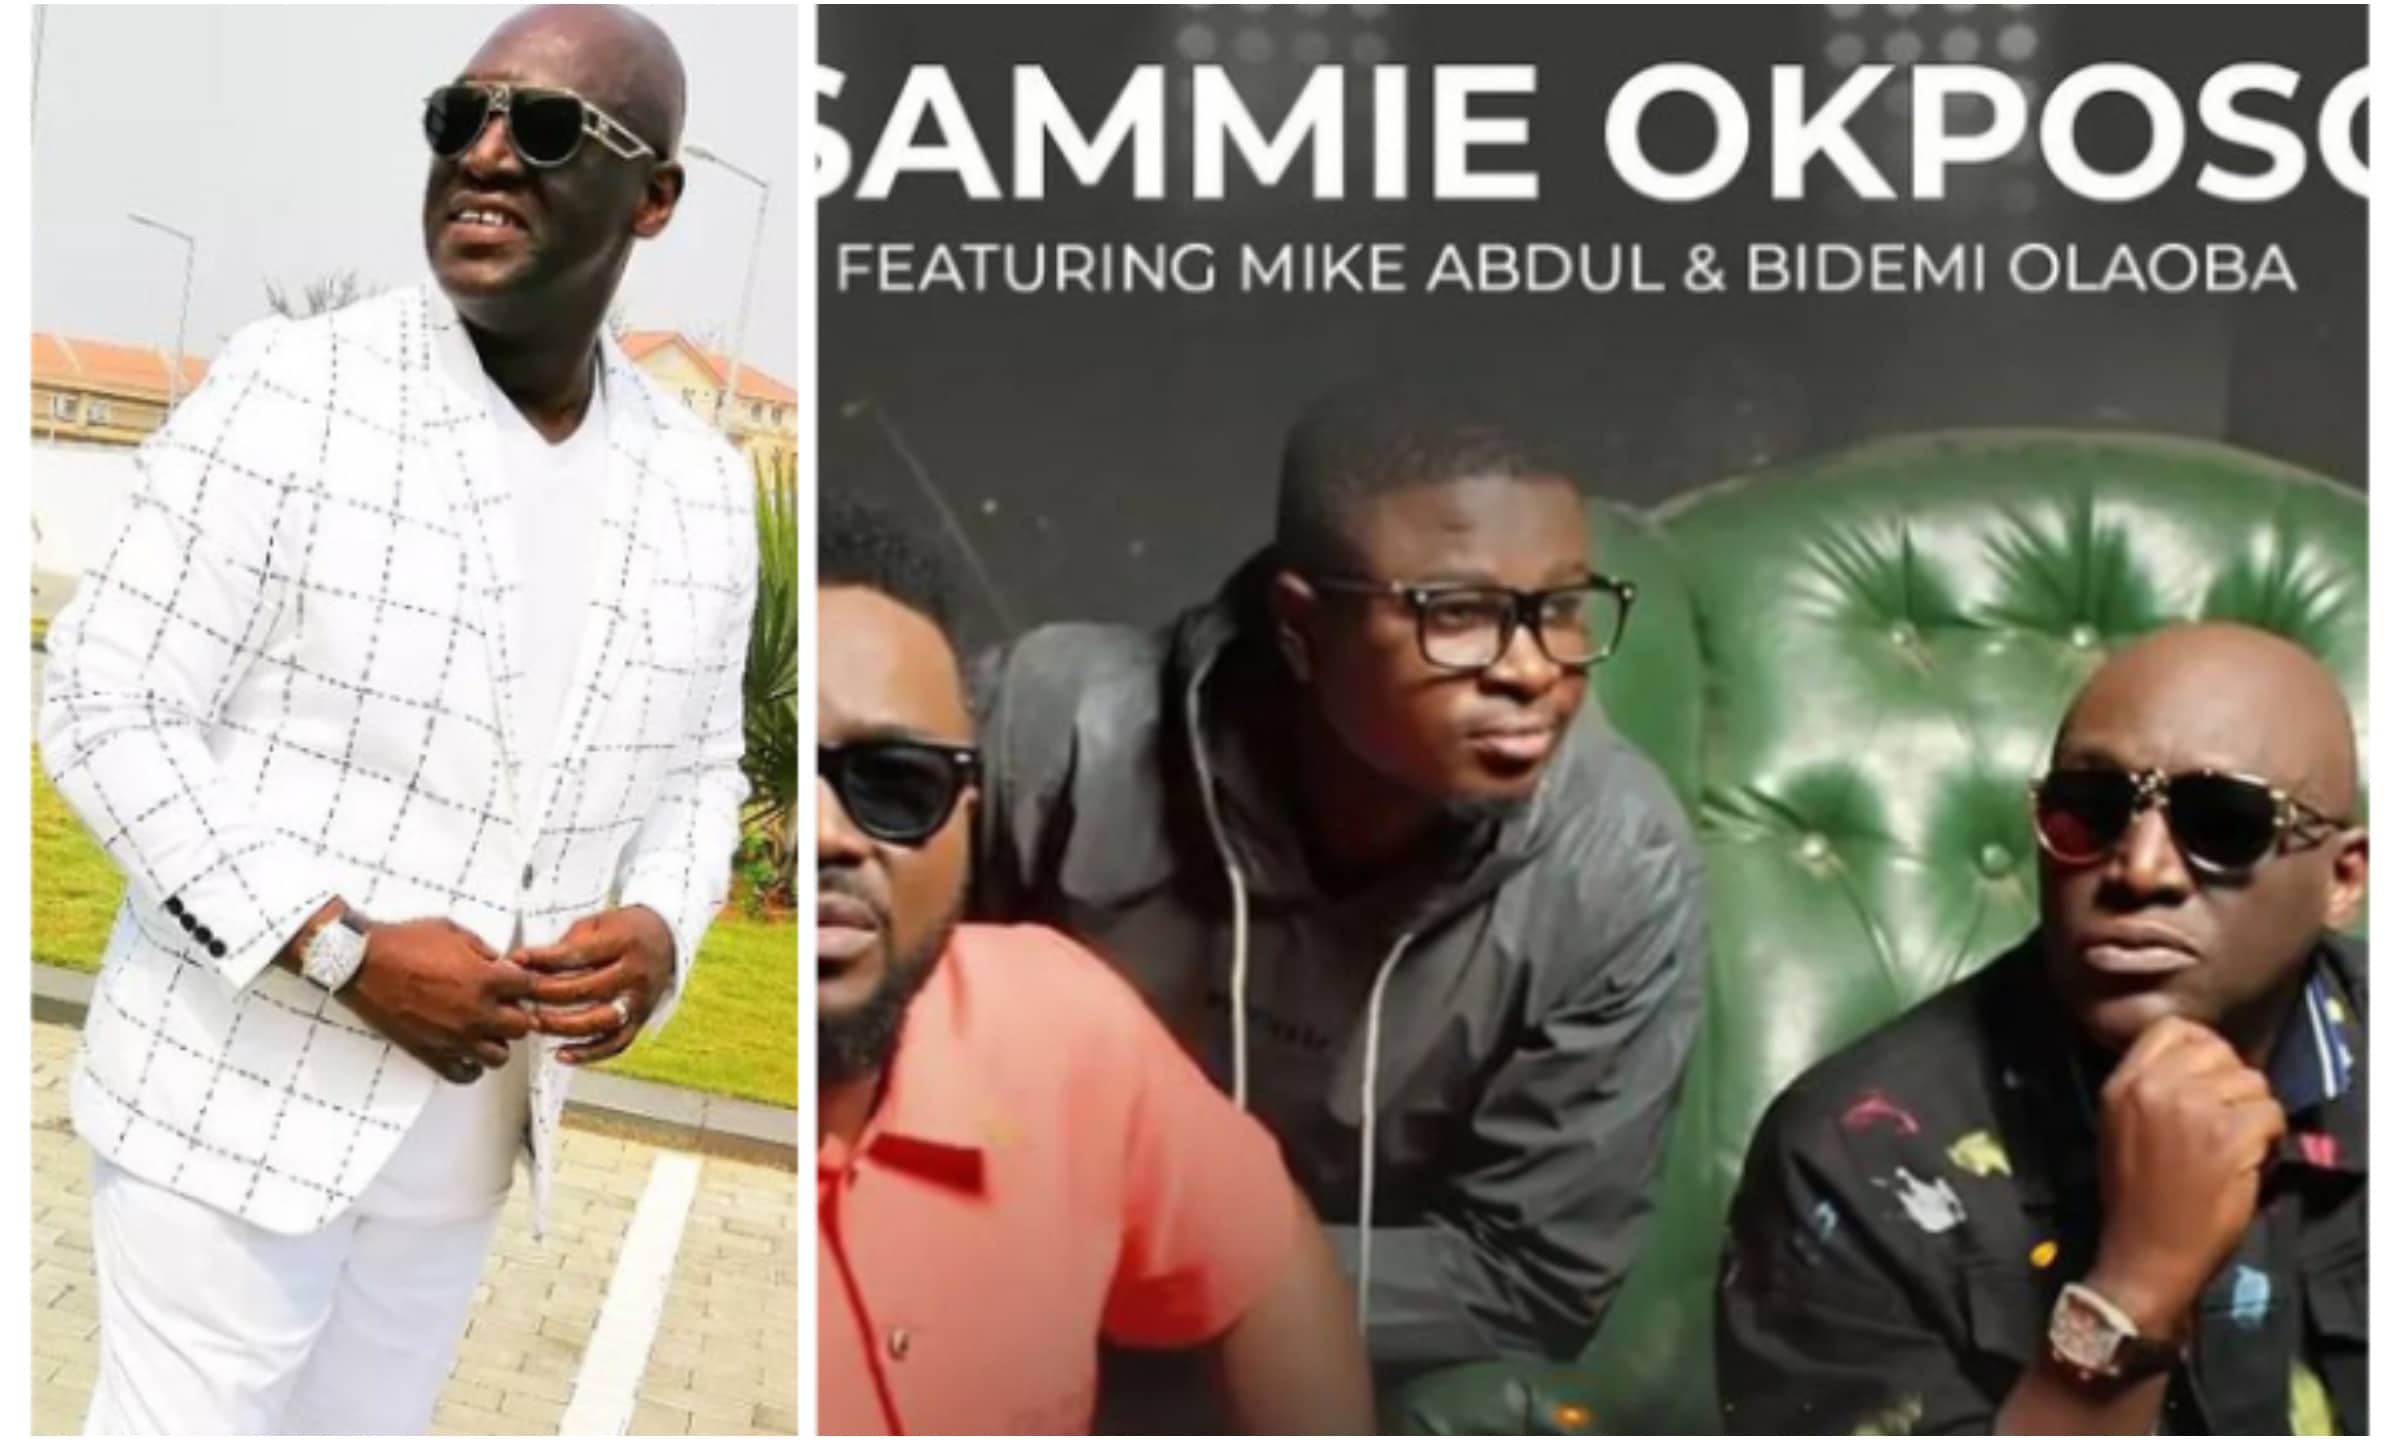 Sammie Okposo new song